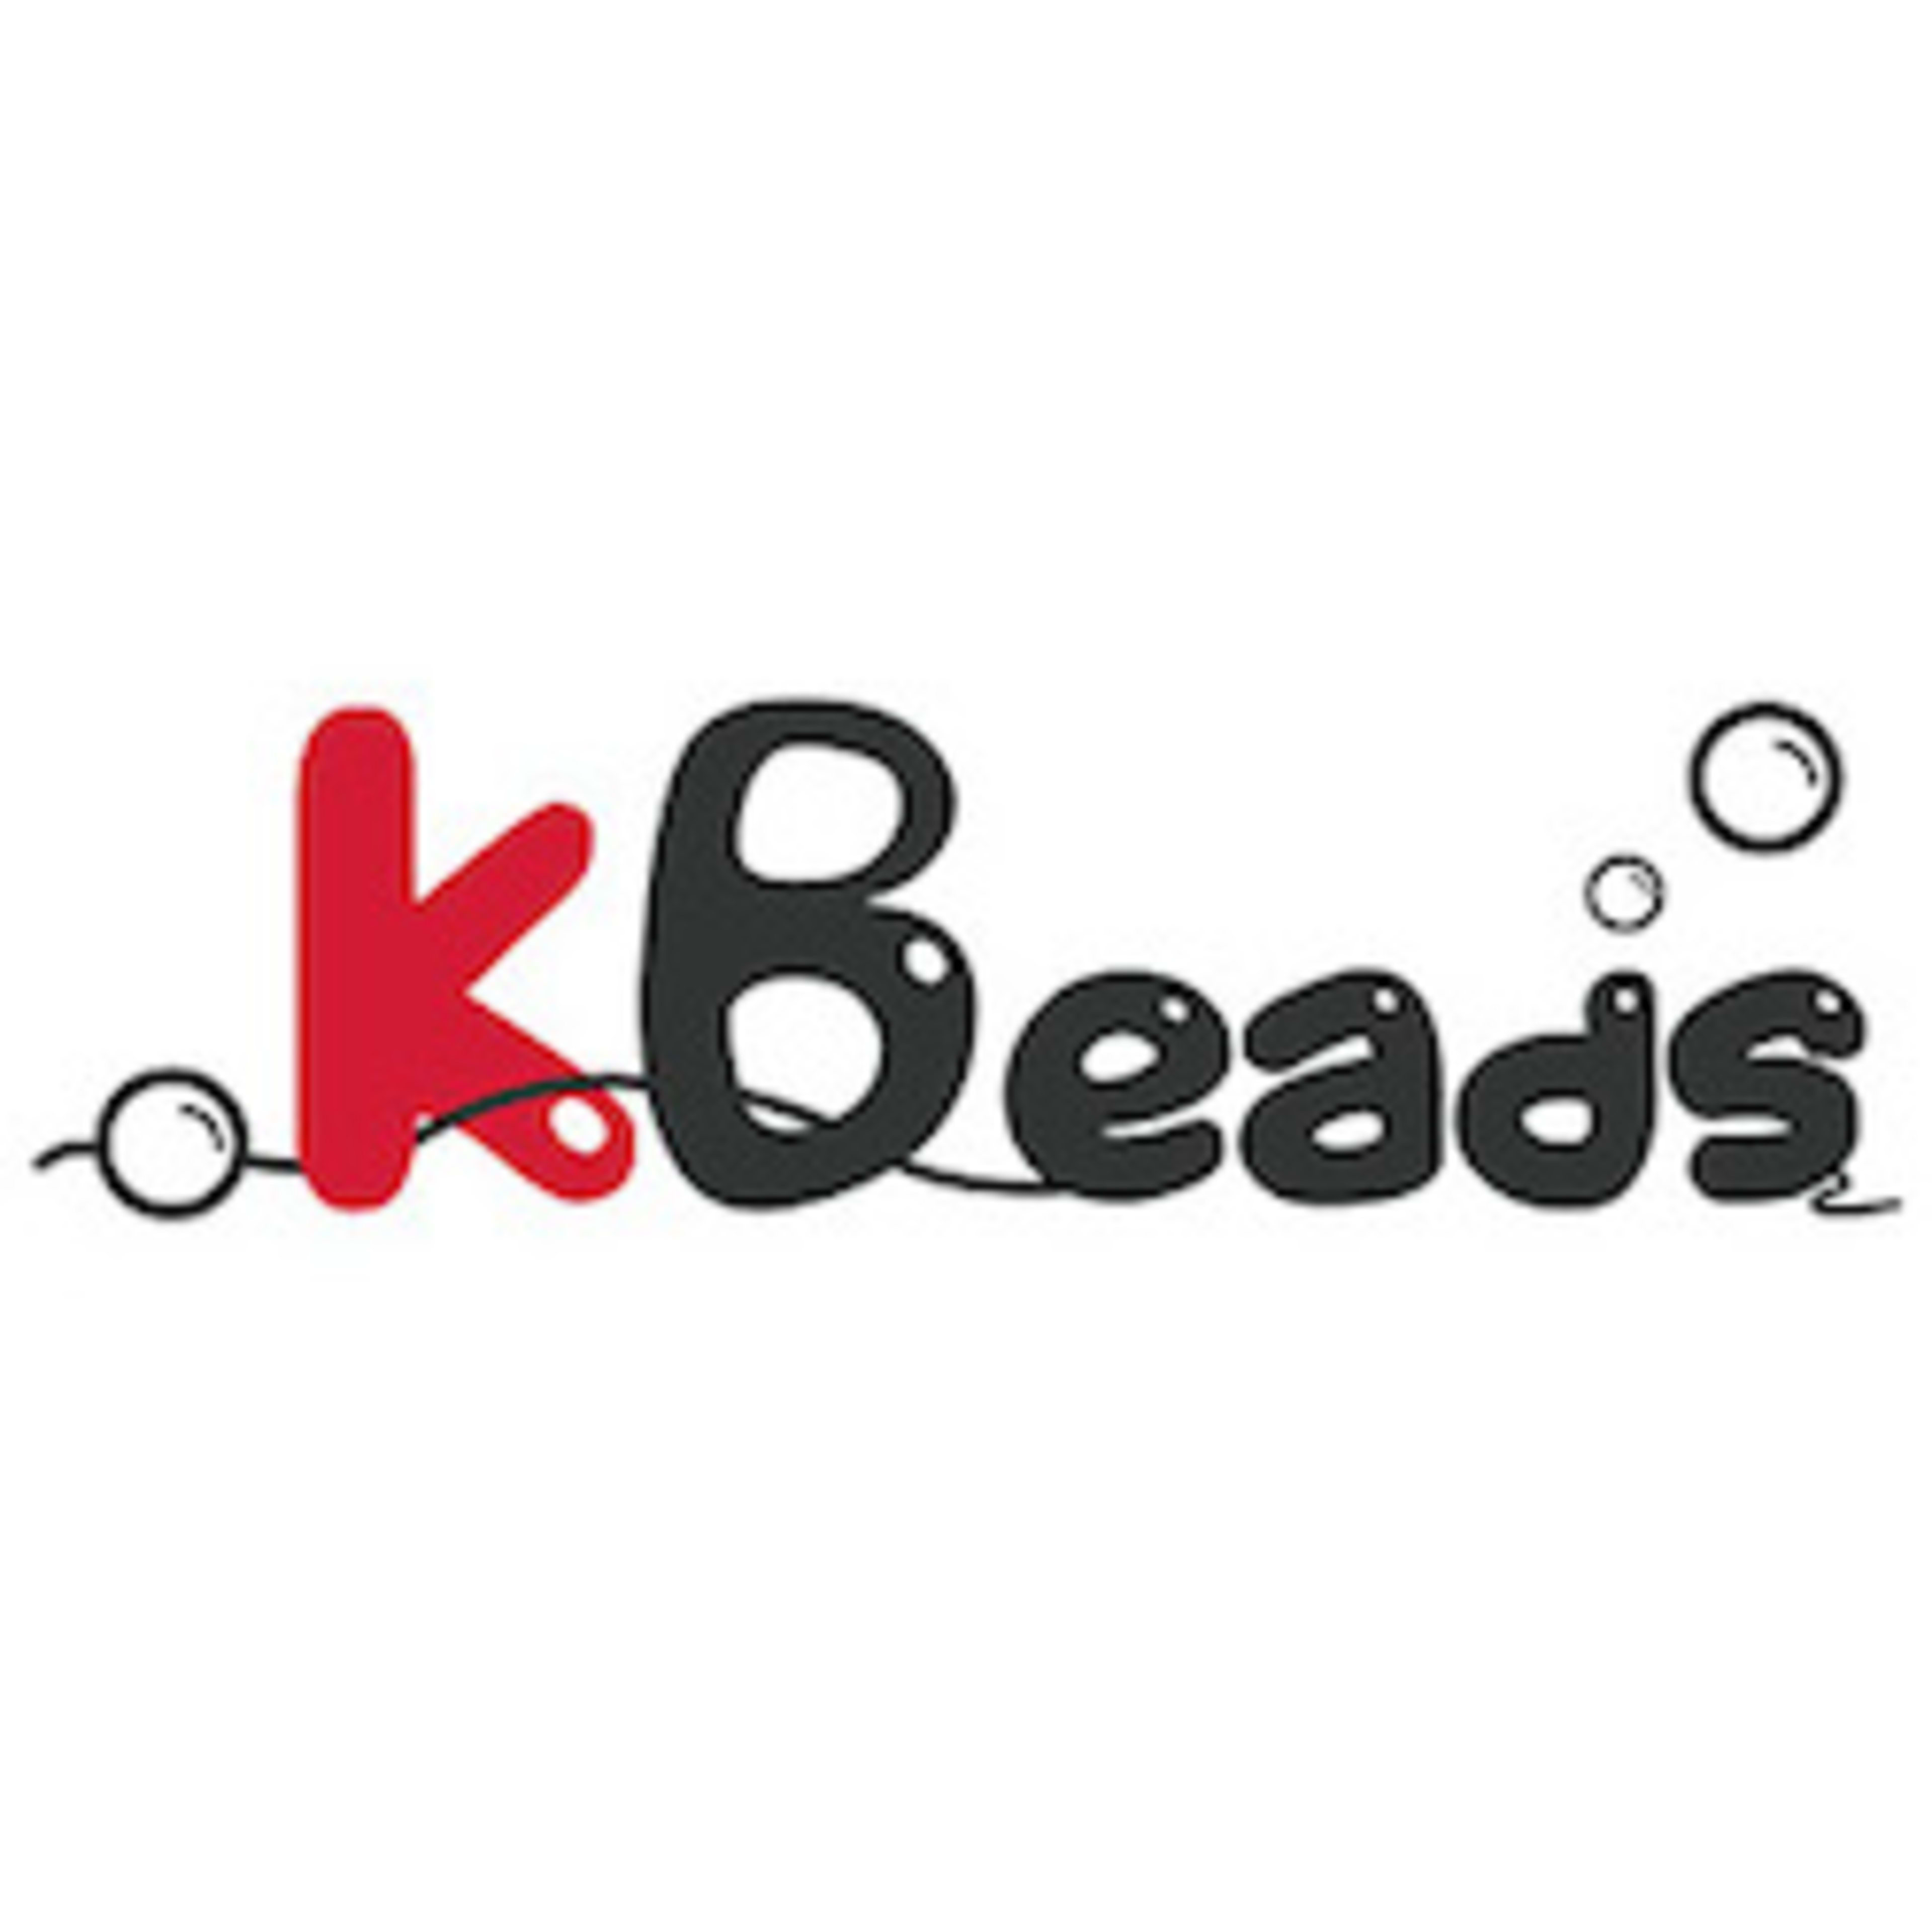 Kbeads Code